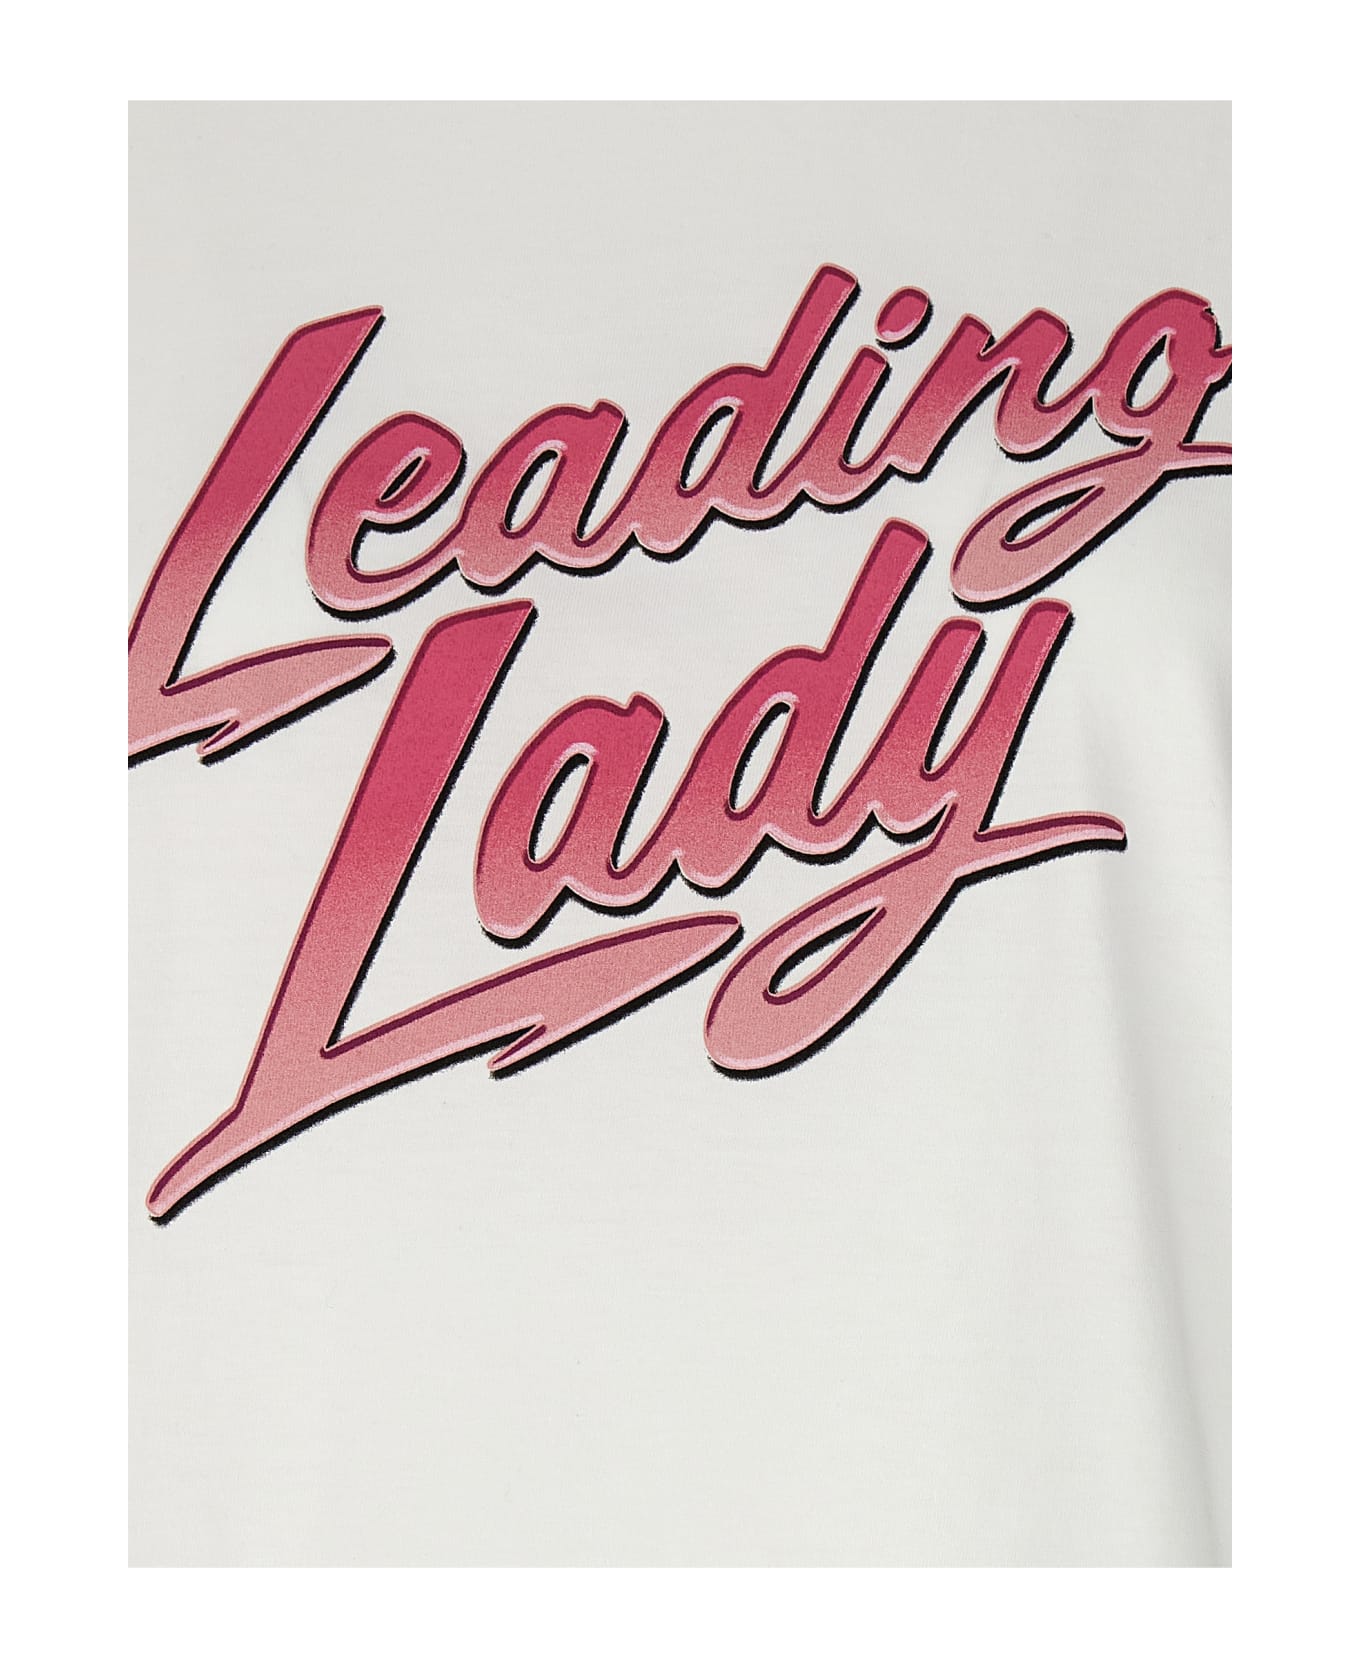 Dsquared2 'leading Lady' T-shirt - White